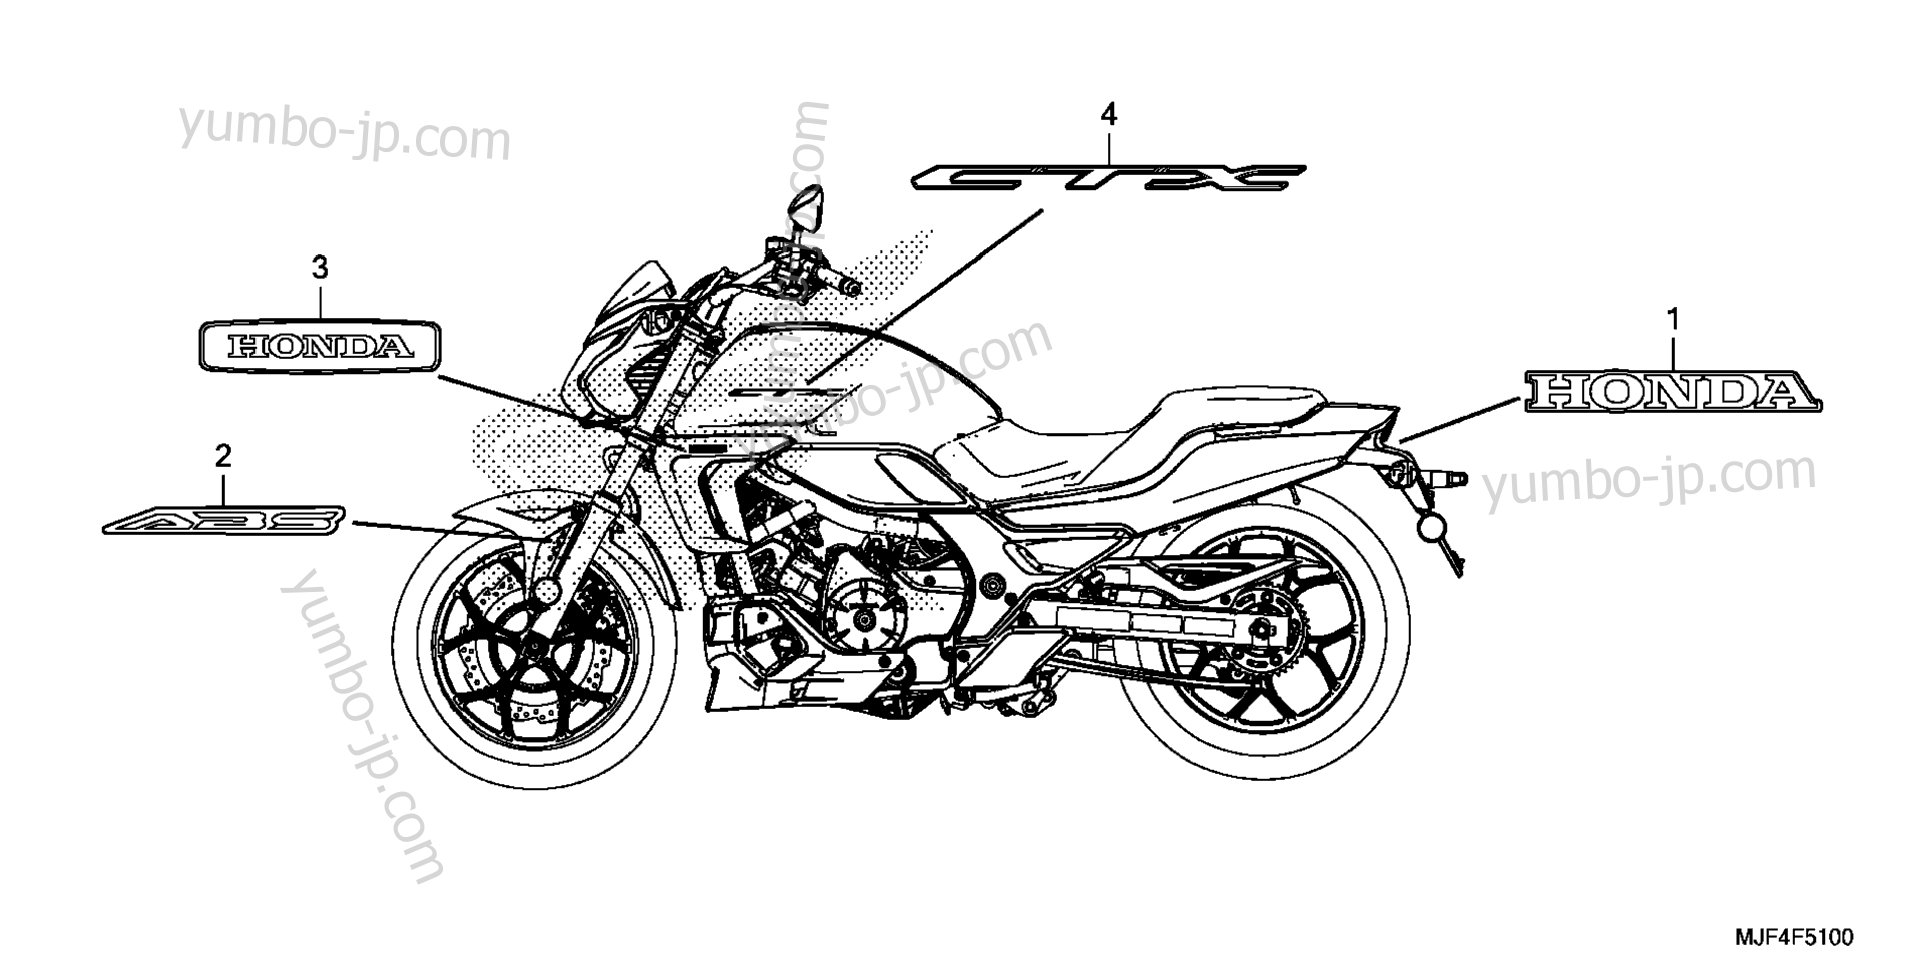 MARK / EMBLEM for motorcycles HONDA CTX700ND A 2014 year